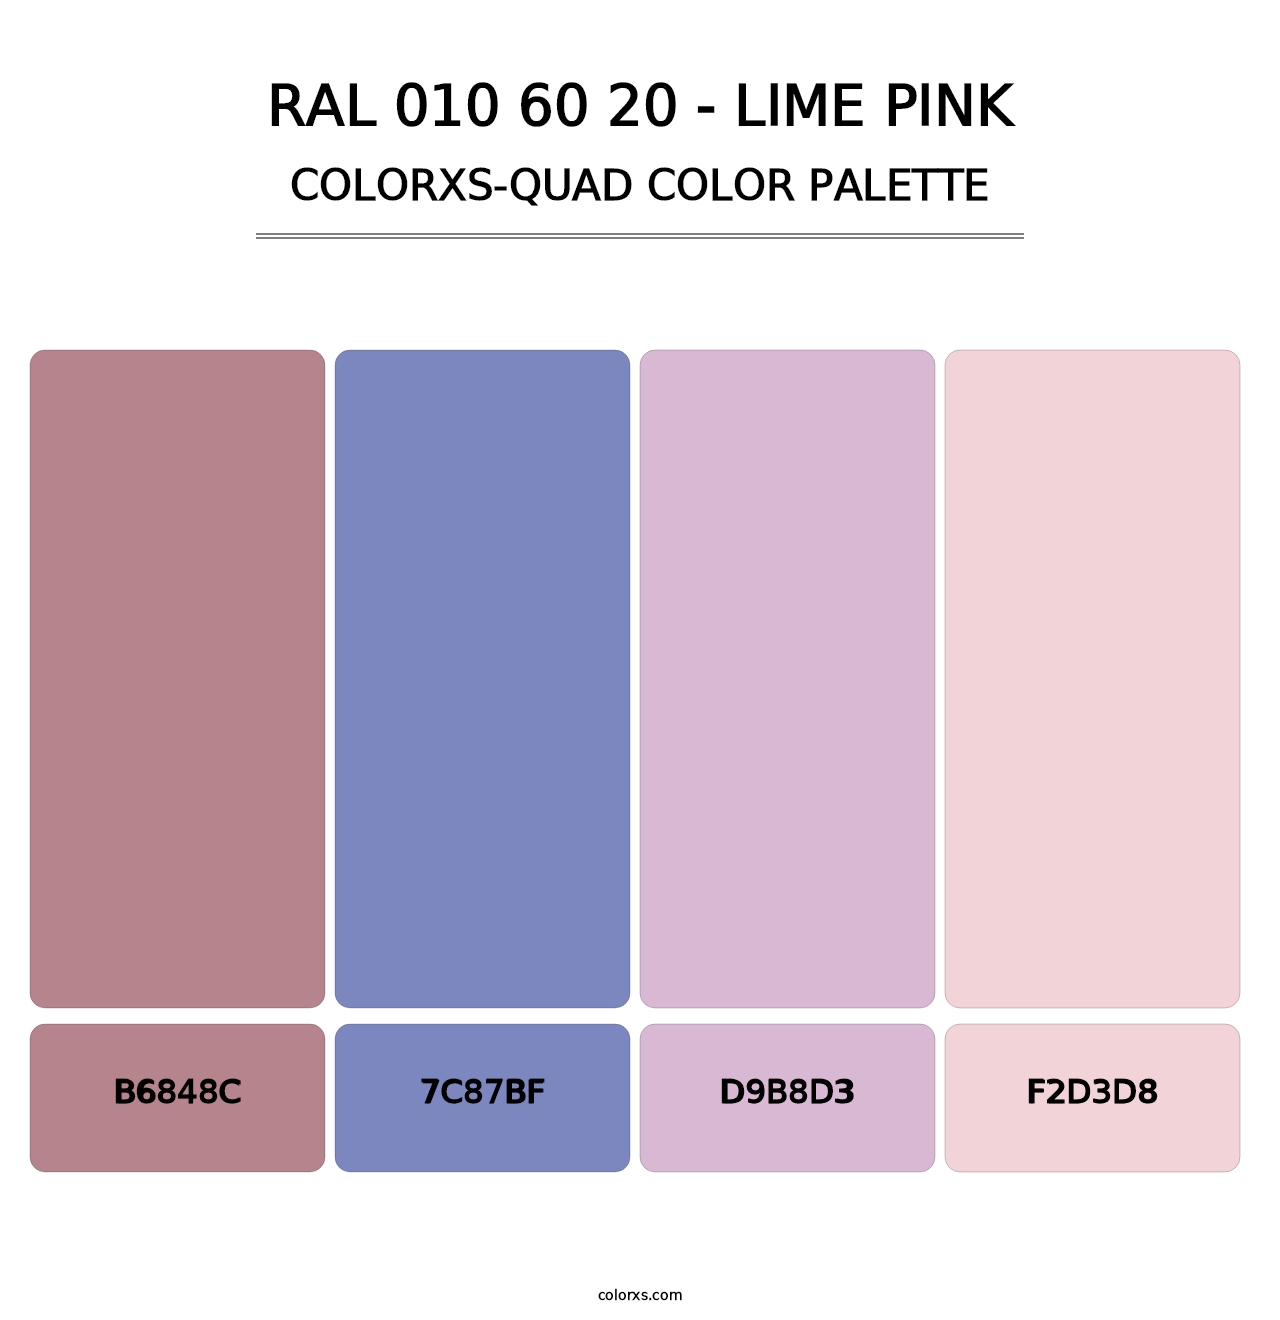 RAL 010 60 20 - Lime Pink - Colorxs Quad Palette